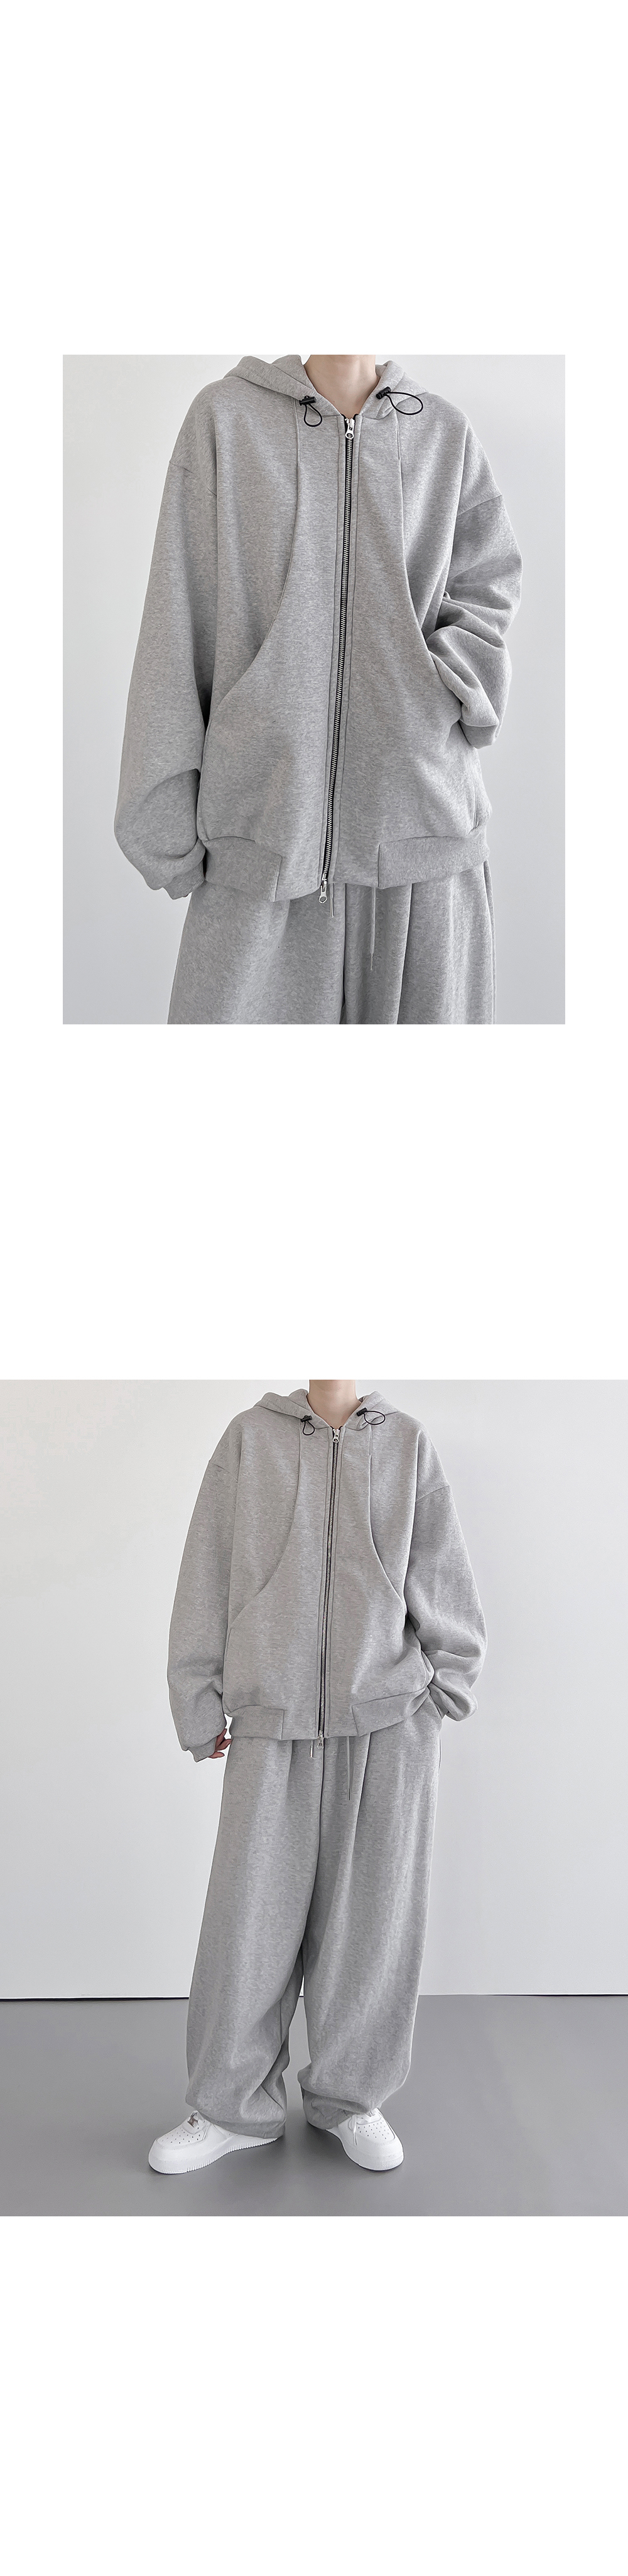 Jacket grey color image-S1L7